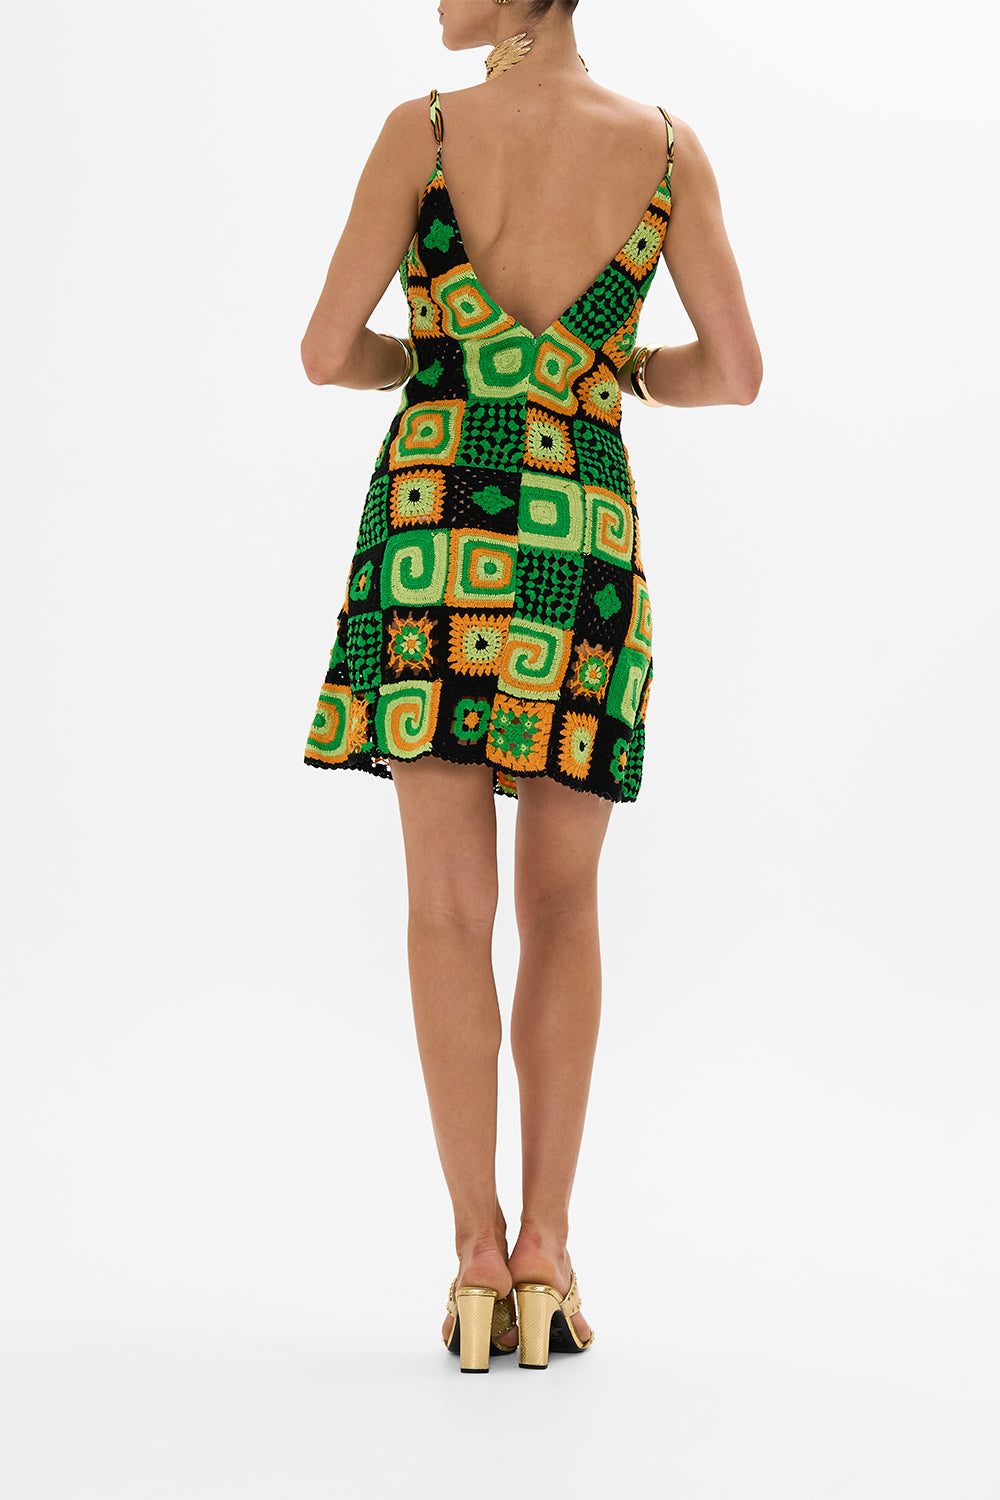 CAMILLA green mini crochet dress with silk top in Good Vibes Generation print.